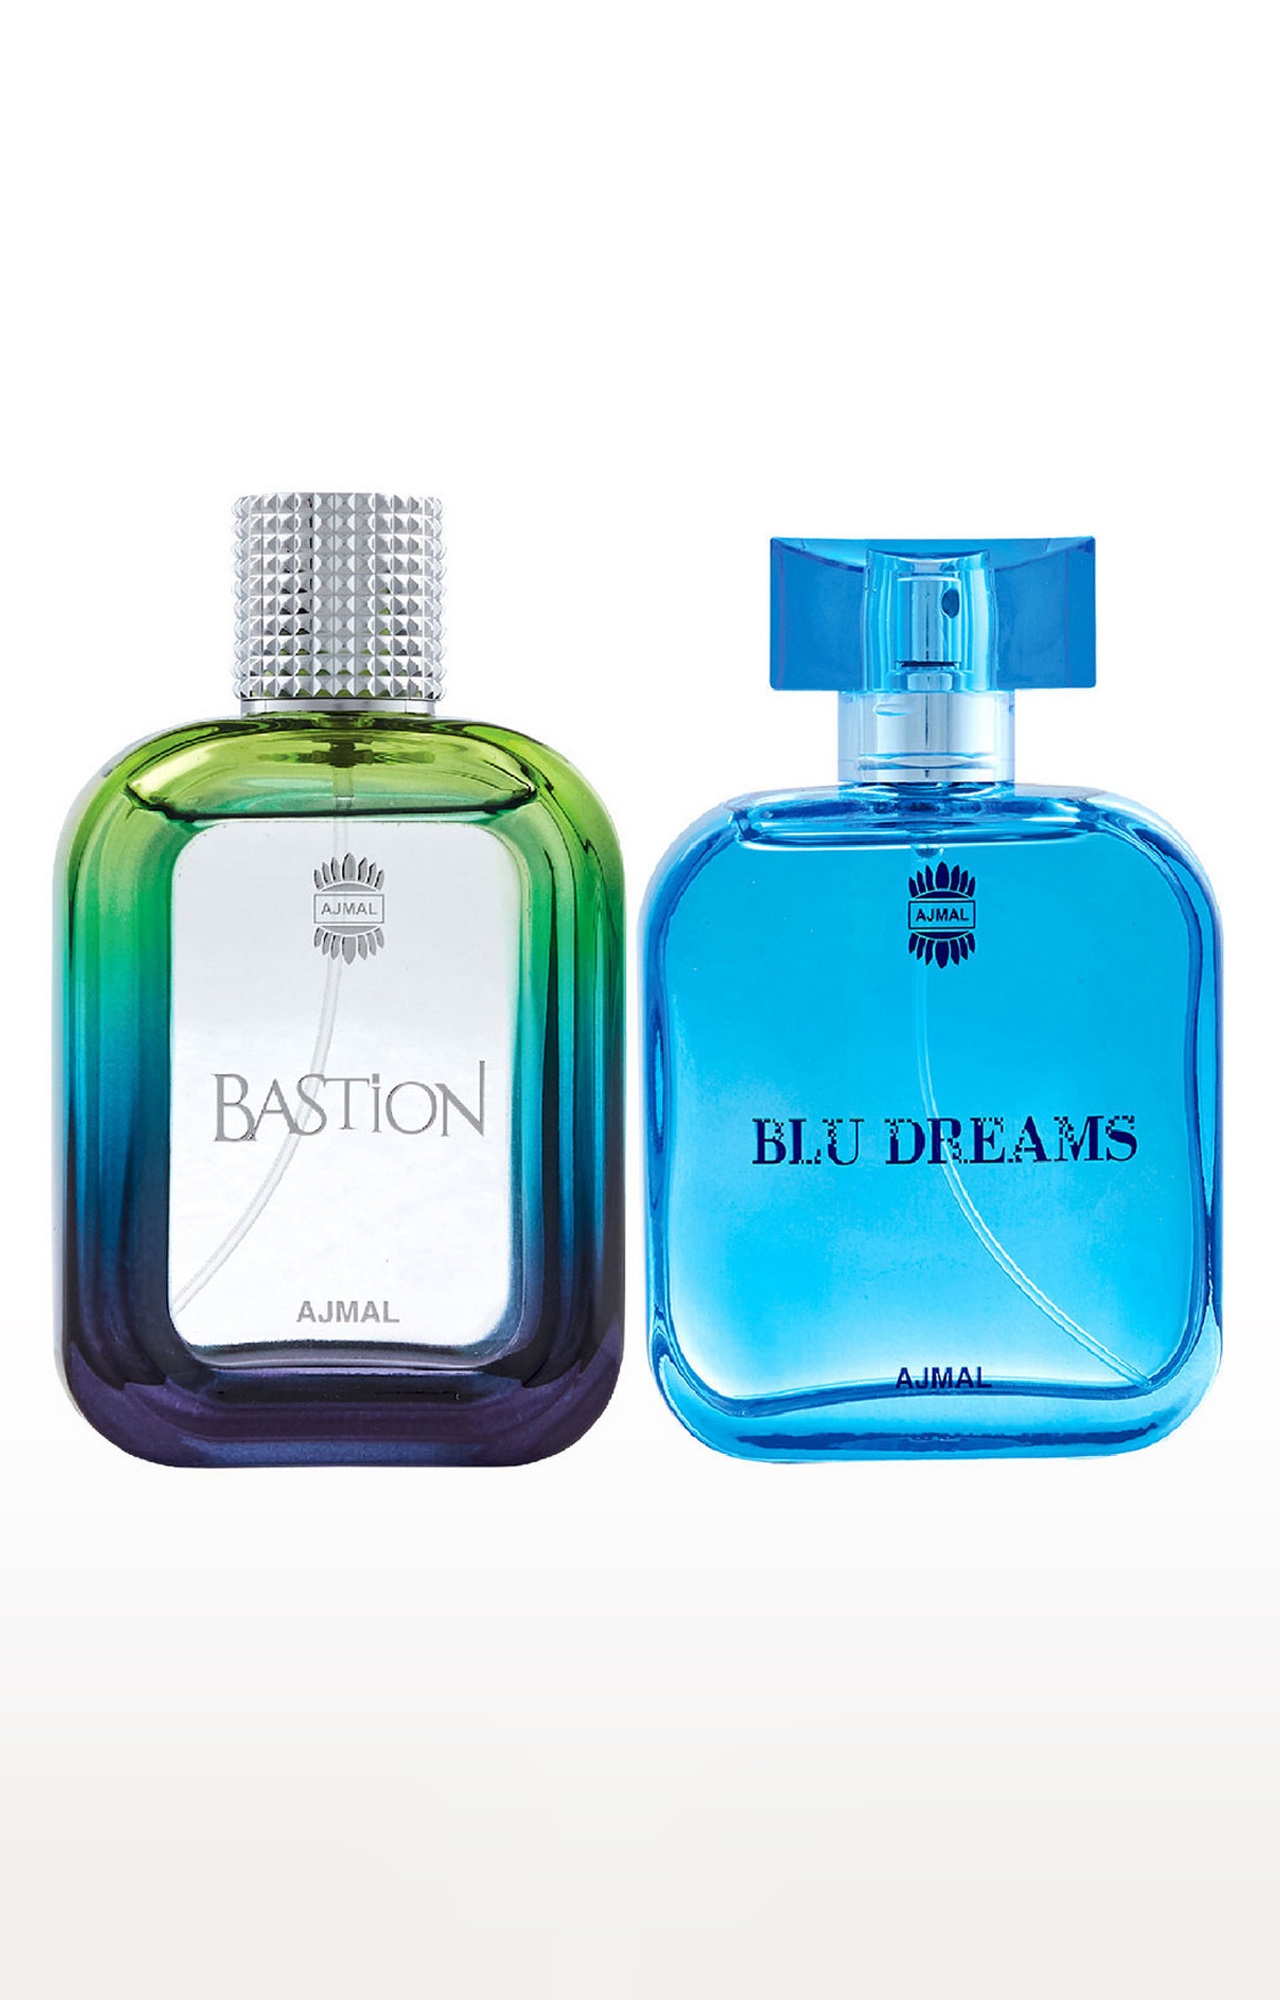 Ajmal | Ajmal Bastion EDP Perfume 100ml for Men and Blu Dreams EDP Citurs Fruity Perfume 100ml for Men FREE 0